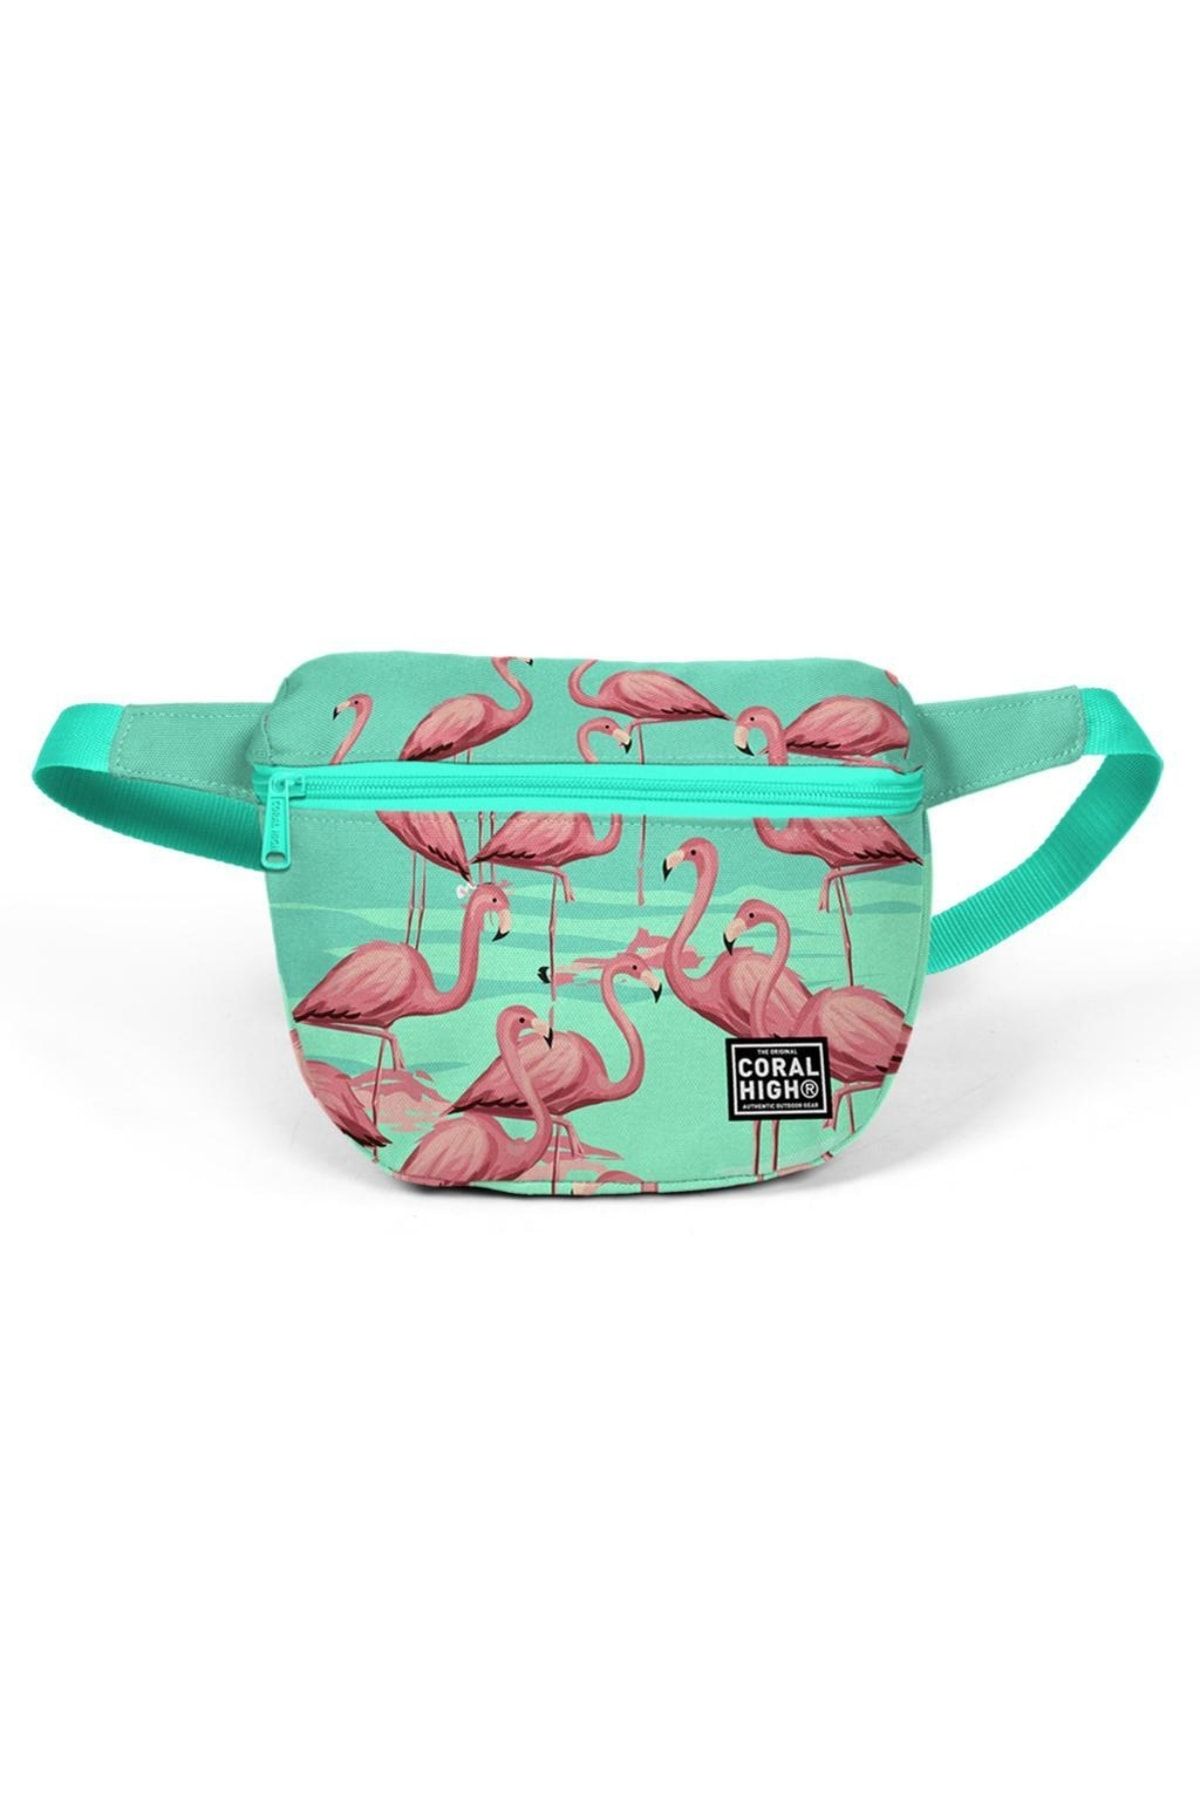 Coral High Su Yeşili Flamingo Desenli Bel Çantası 22600